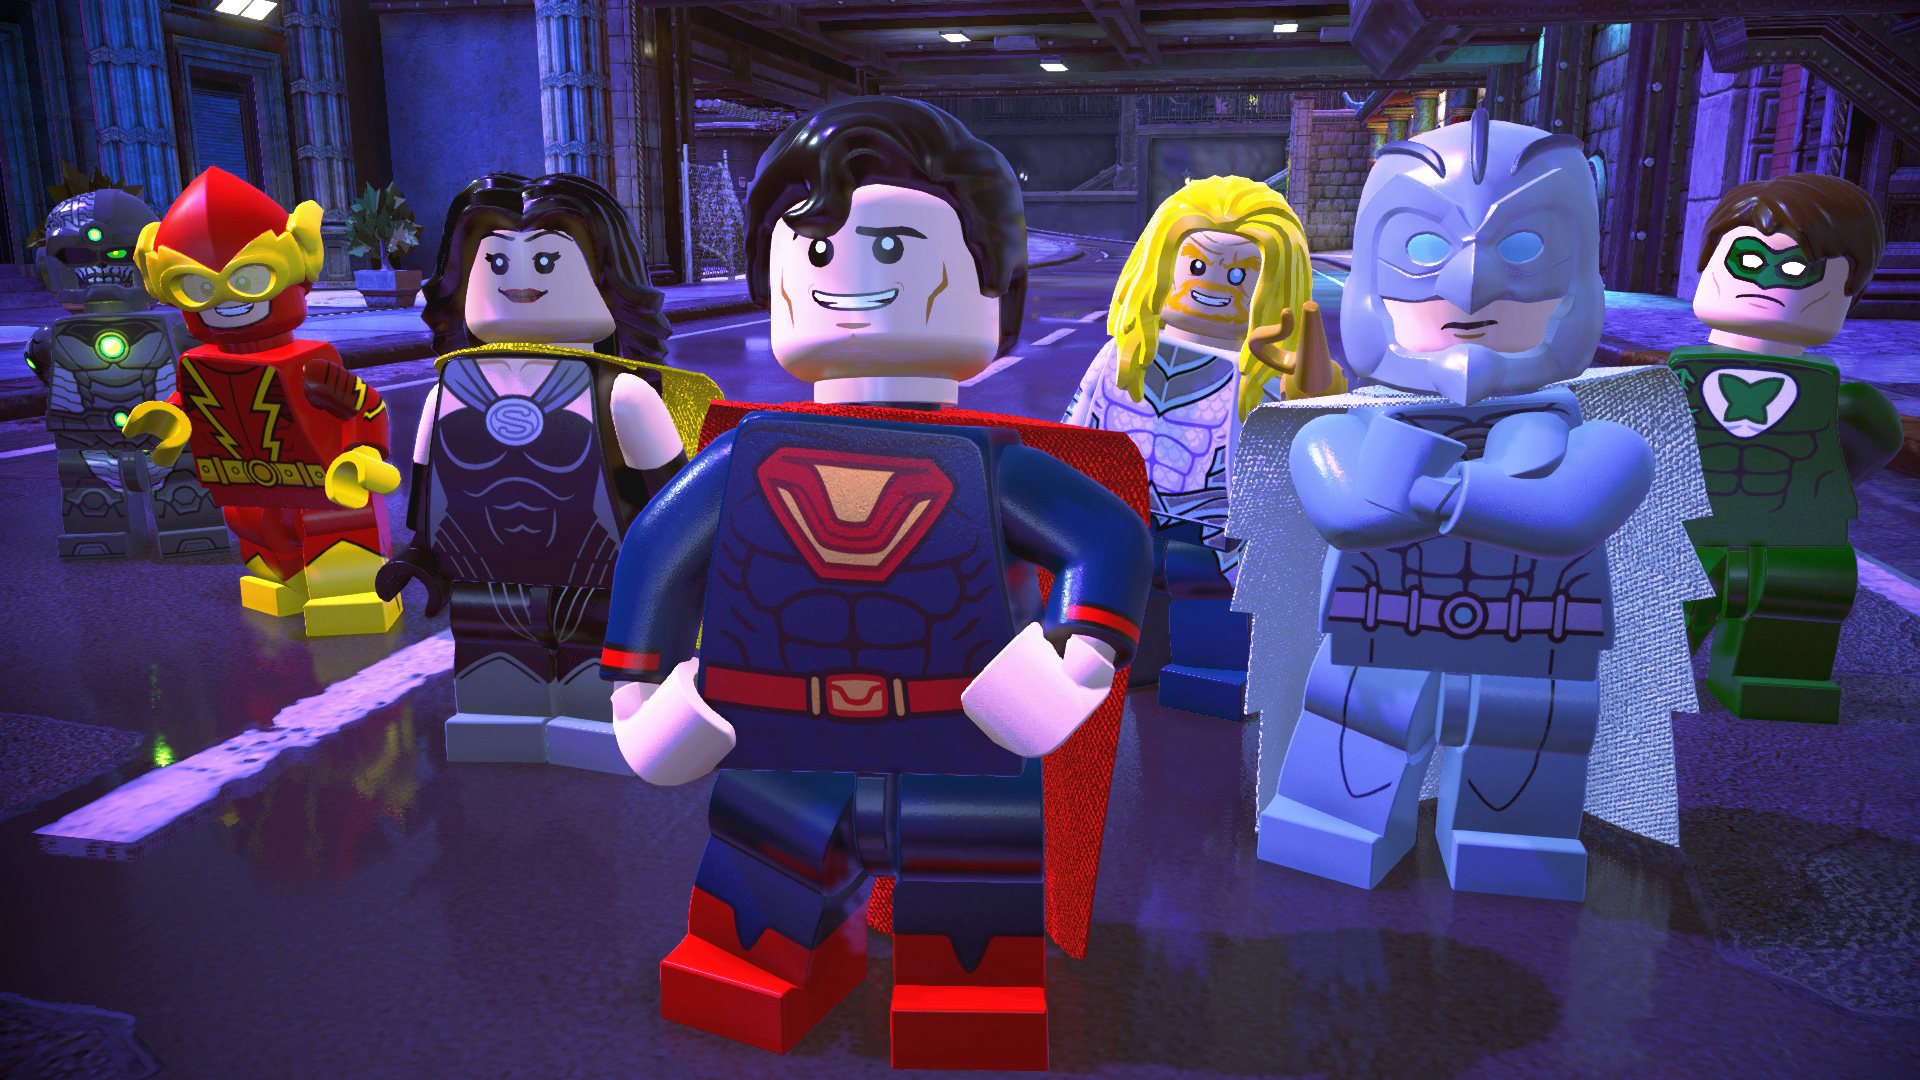 LEGO DC Super-Villains Steam CD Key